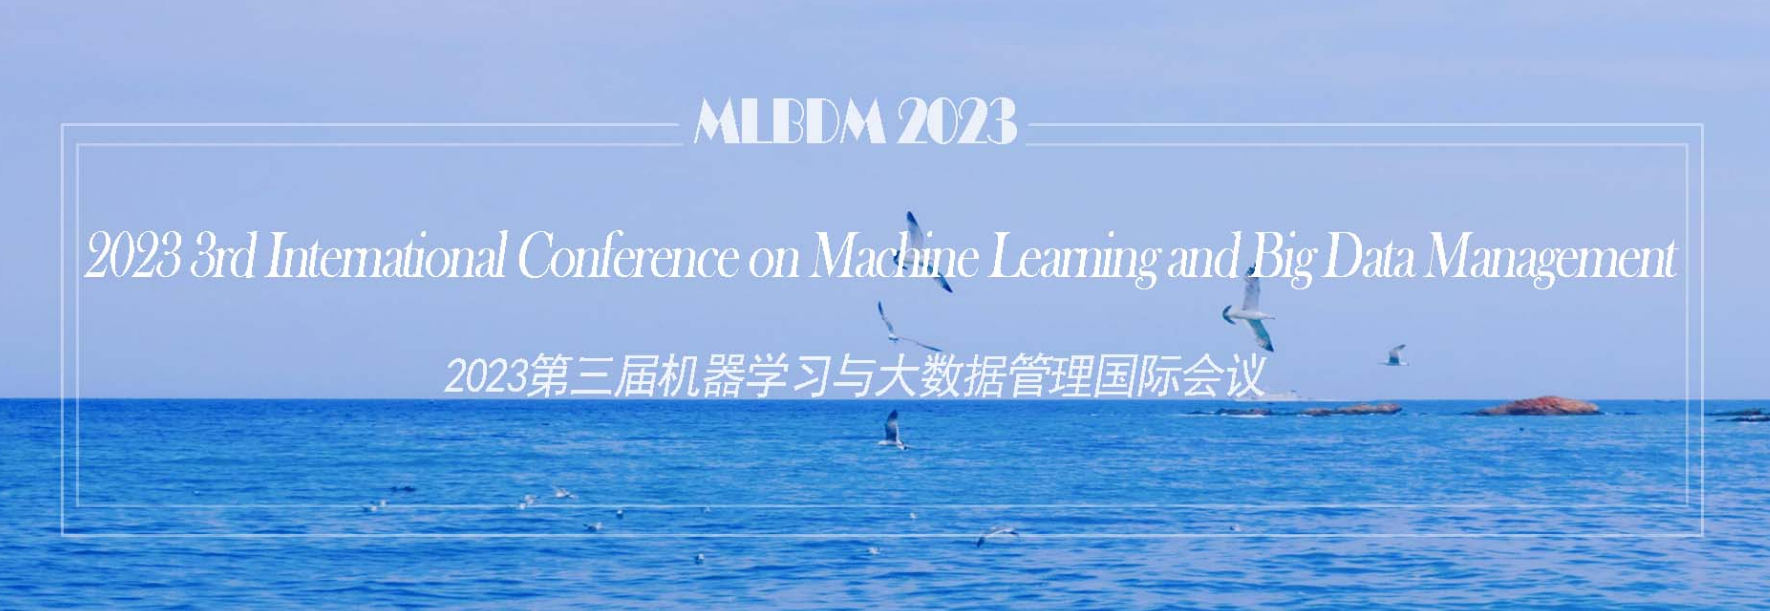 2023 3rd International Conference on Machine Learning and Big Data Management（MLBDM 2023）-EI Compendex, Sanya, Hainan, China